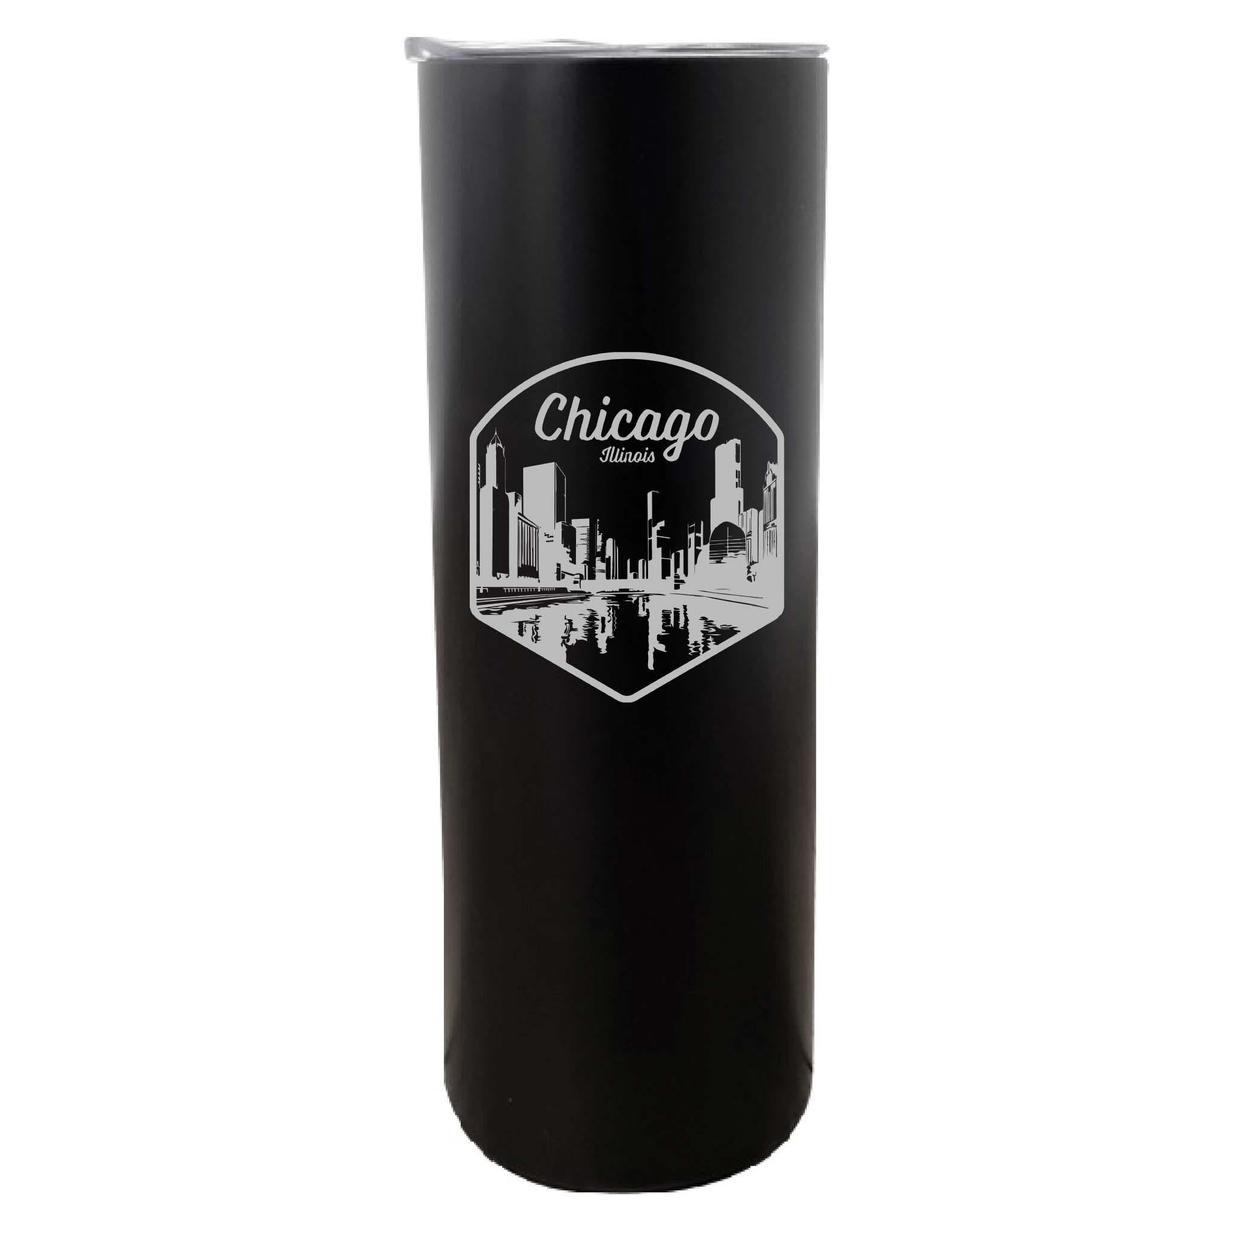 Chicago Illinois Souvenir 20 Oz Engraved Insulated Skinny Tumbler - Black Glitter,,Single Unit